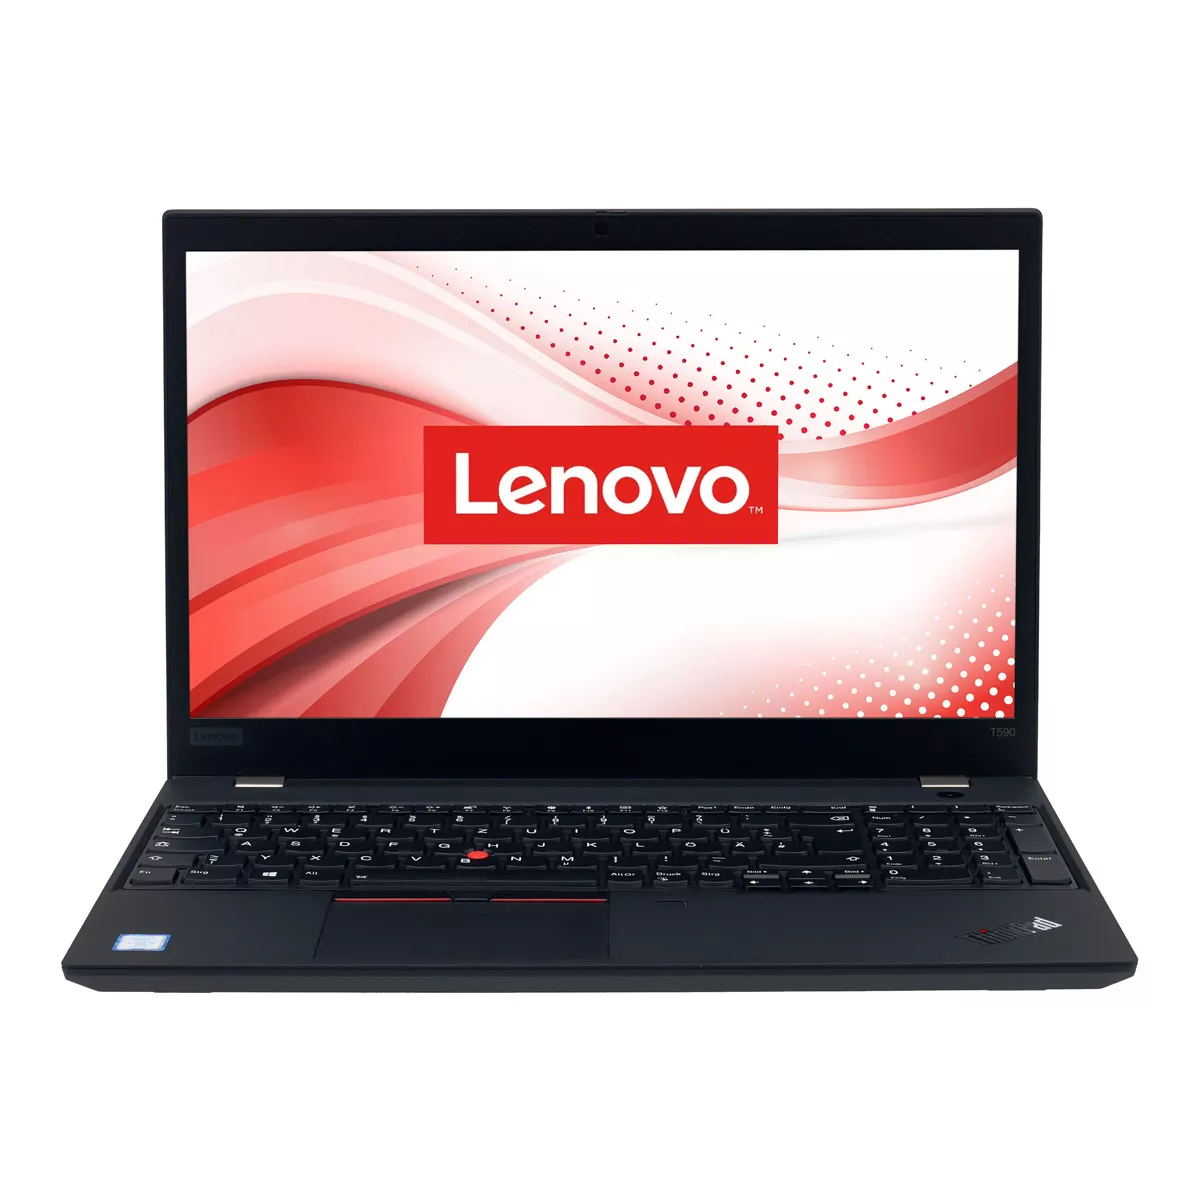 Lenovo ThinkPad T590 Core i7 8665U Full-HD Touch 16 GB 500 GB M.2 nVME SSD Webcam A+